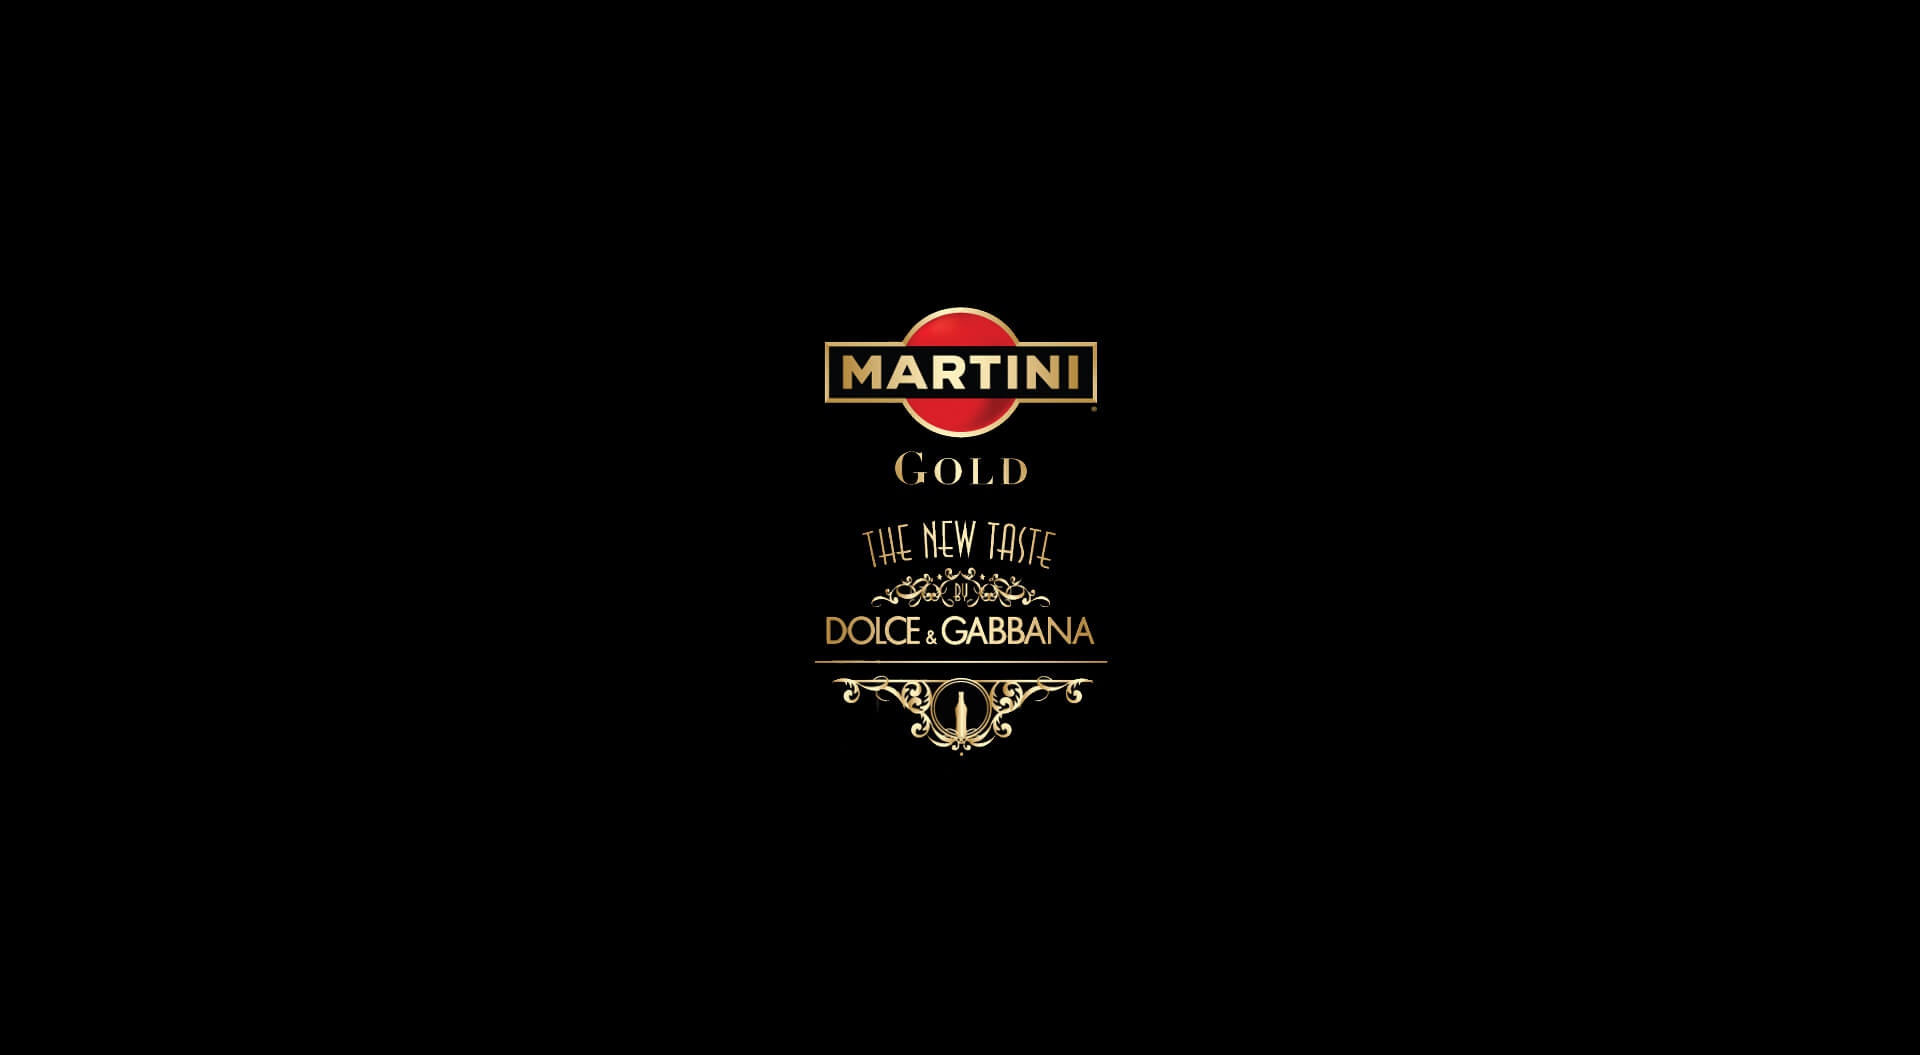 Martini Gold the new taste Dolce & Gabbana brand identity for Bacardi Global Travel Retail